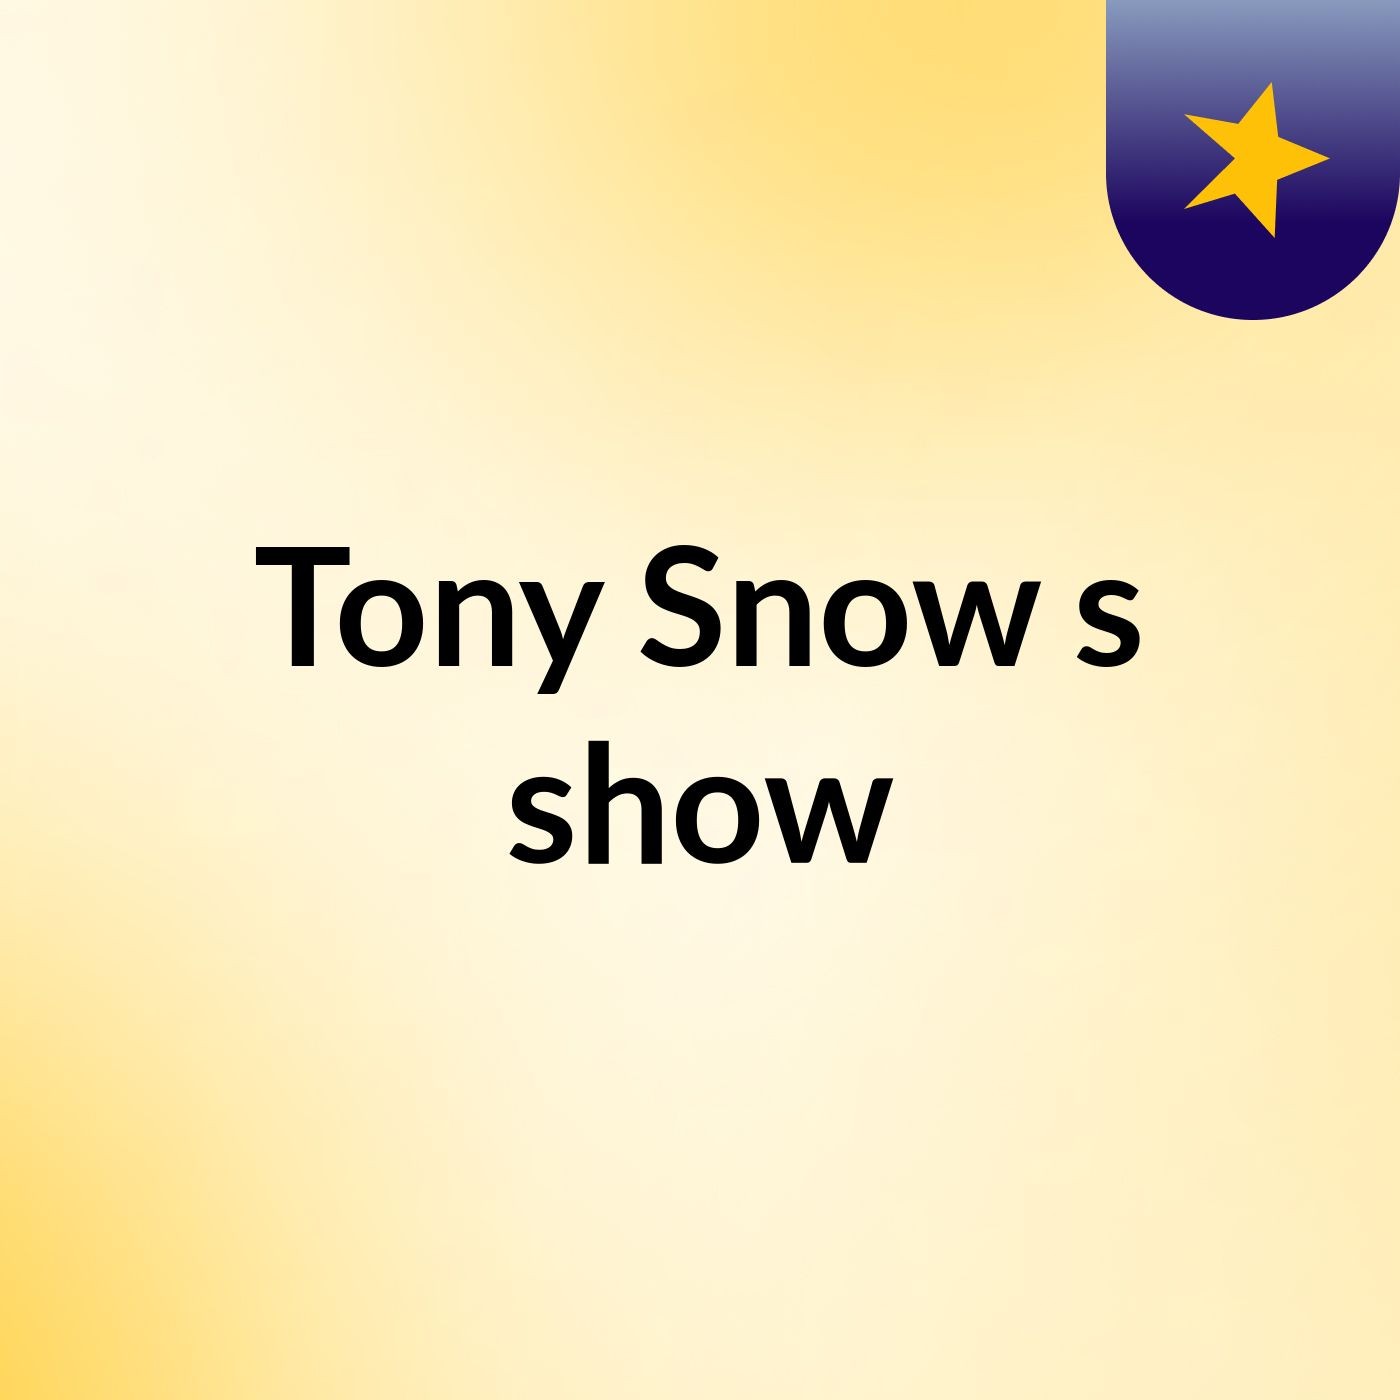 Tony Snow's show